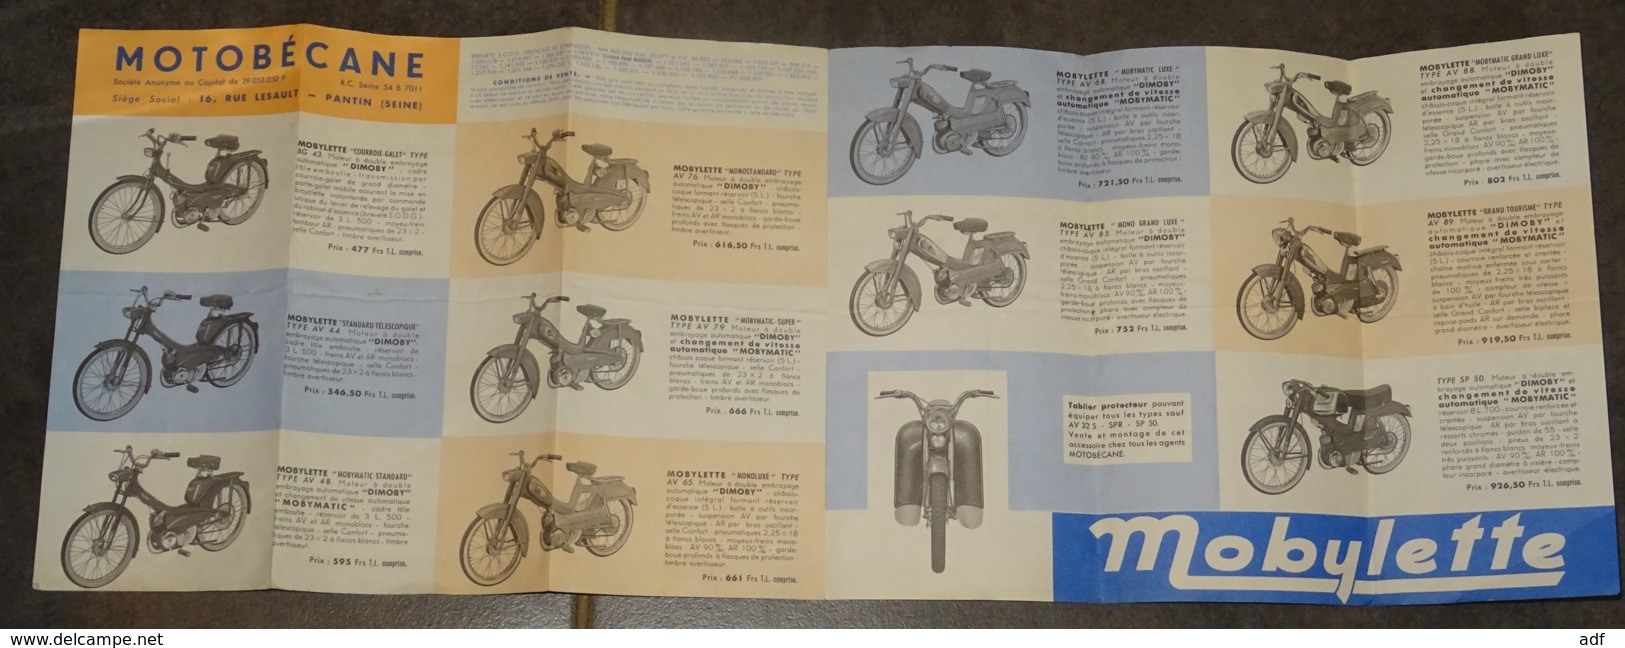 DEPLIANT PUB PUBLICITAIRE MOBYLETTE BICYCLETTE MOTORISEE, TARIF JANVIER 1965 DIFFERENTS TYPES, " DIMOBY " " MOBYMATIC " - Moto